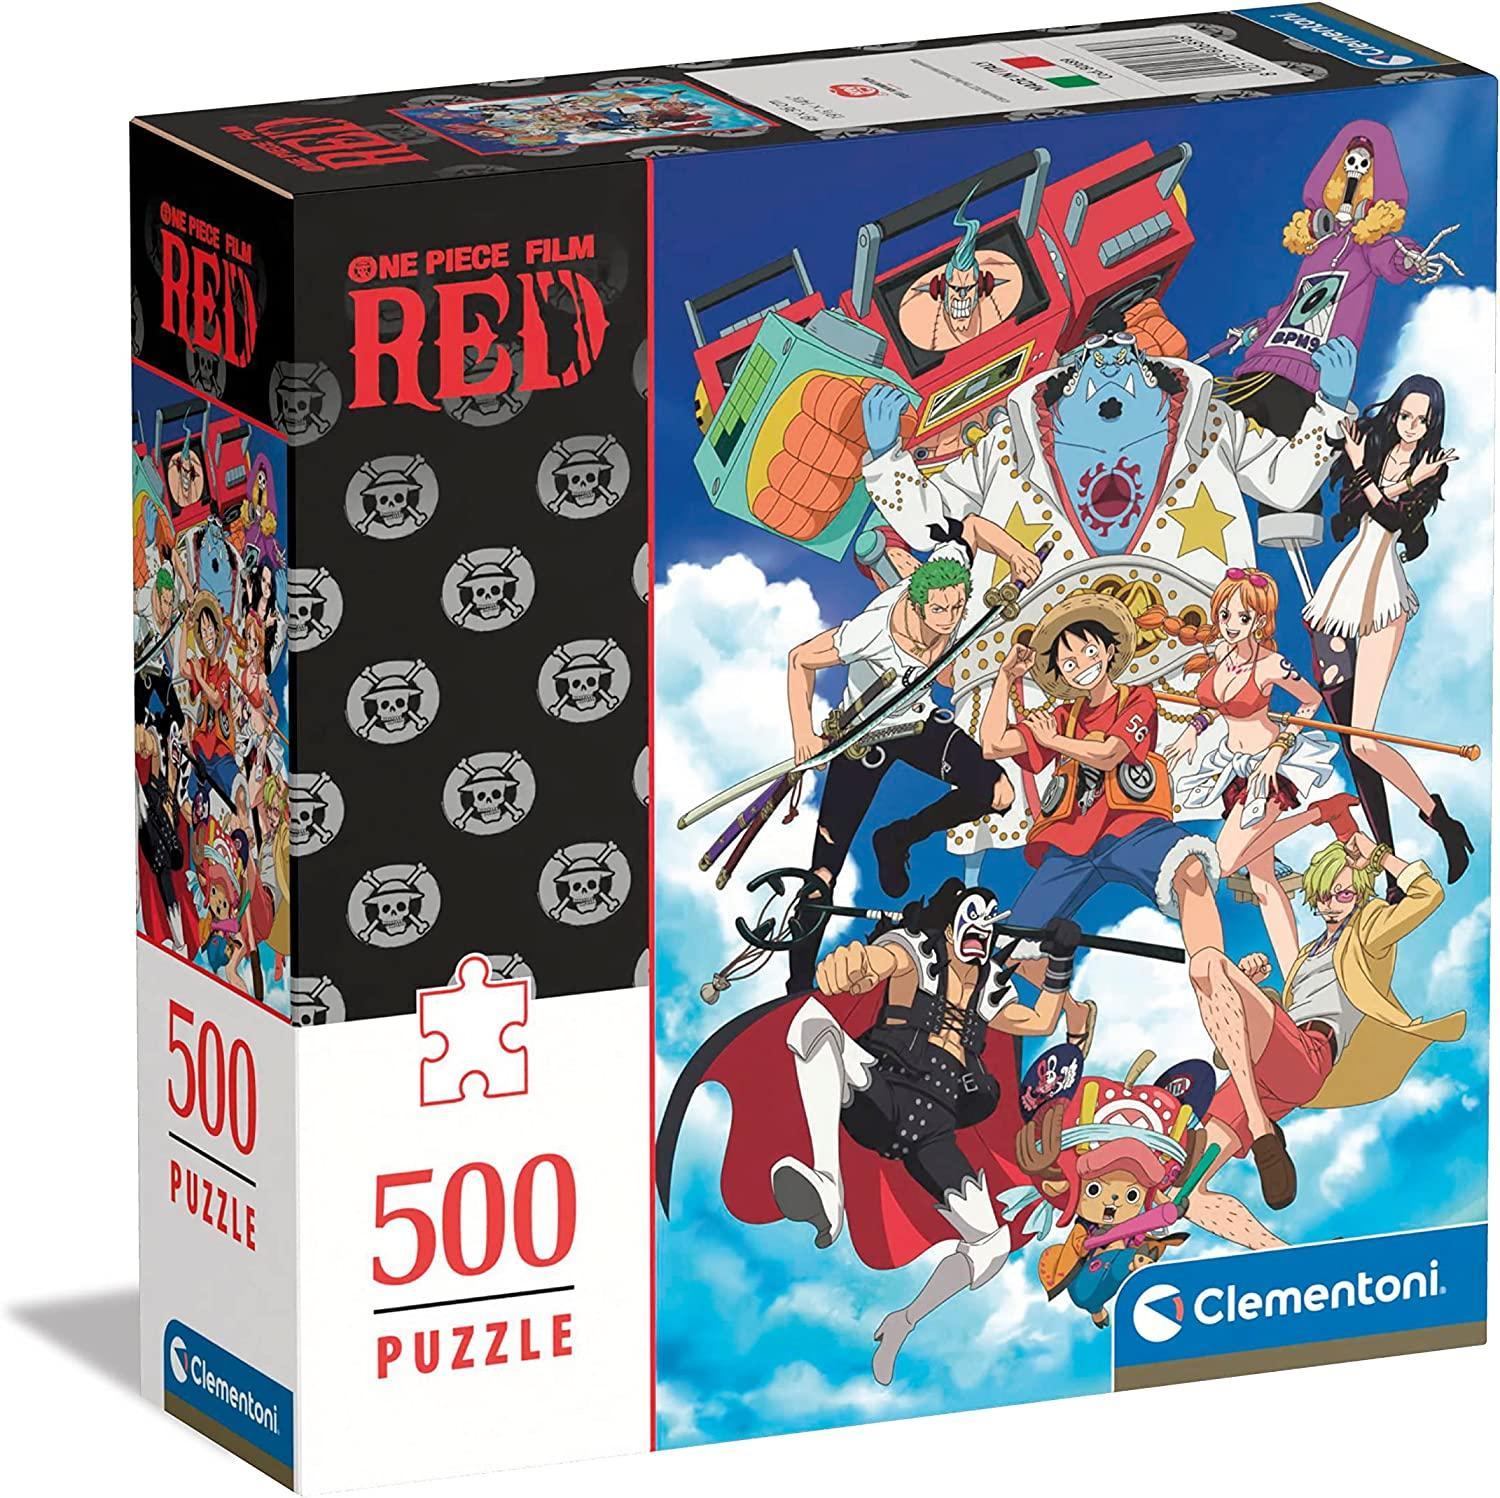 clementoni puzzle 500 pz one piece film red